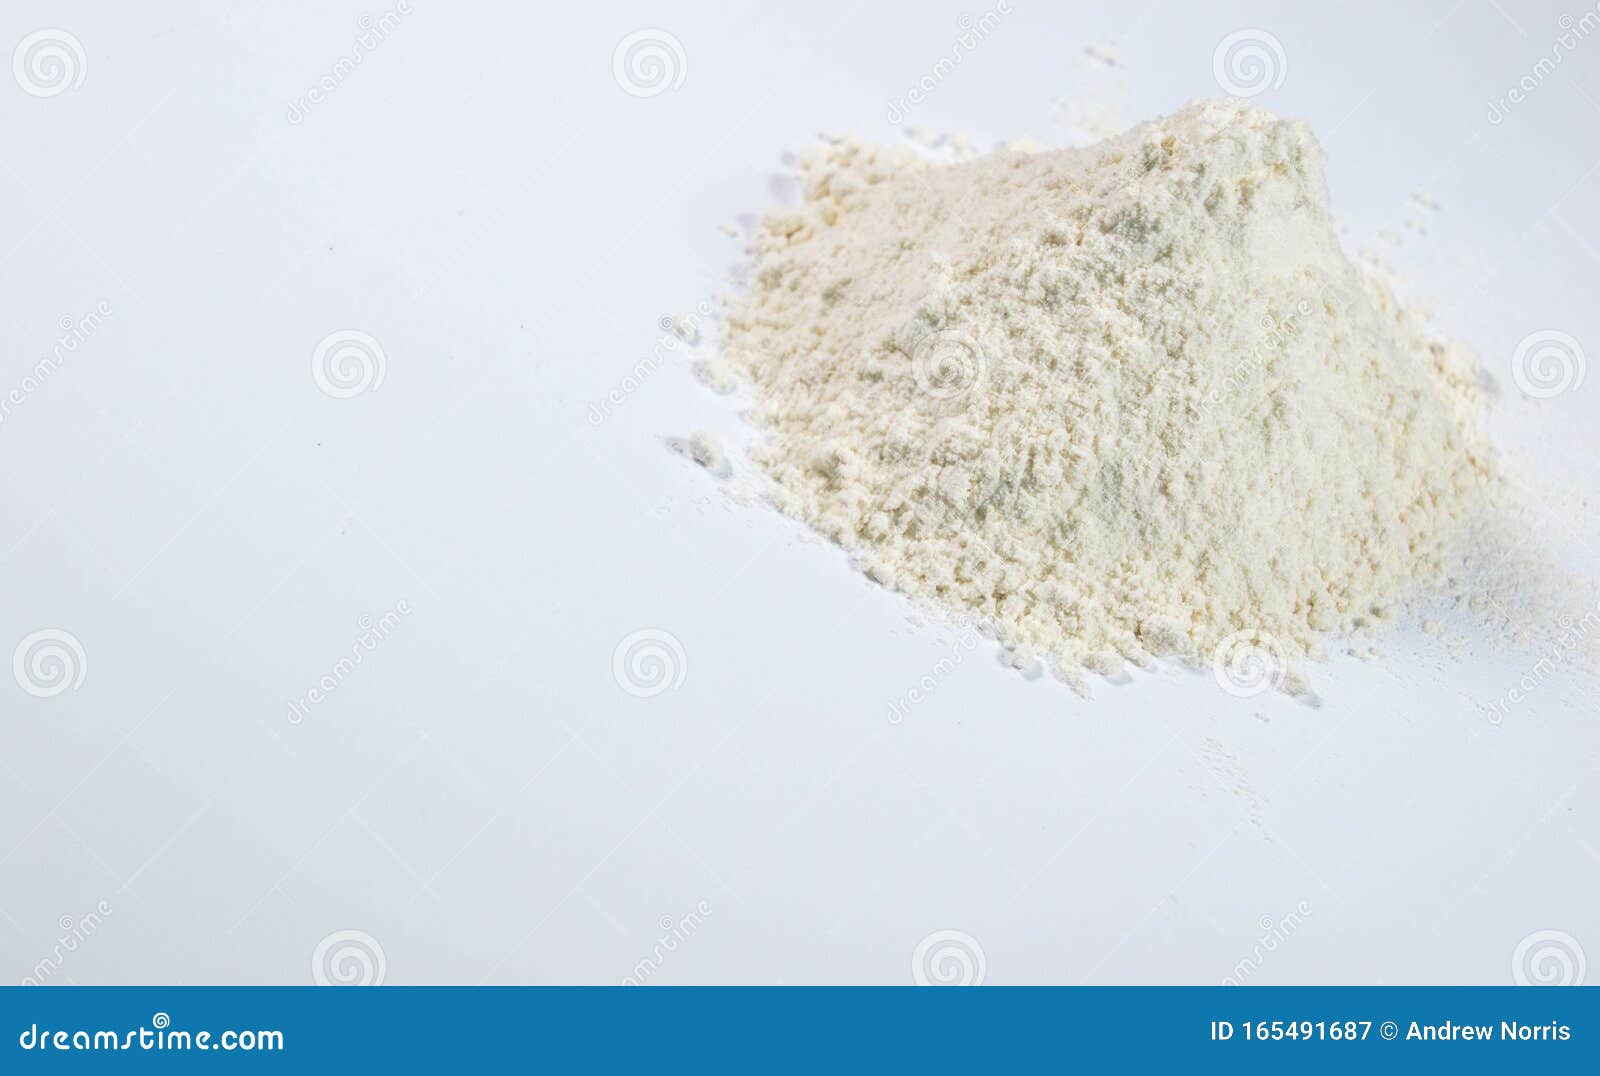 https://thumbs.dreamstime.com/z/cocain-pile-large-pileup-cocaine-powder-165491687.jpg